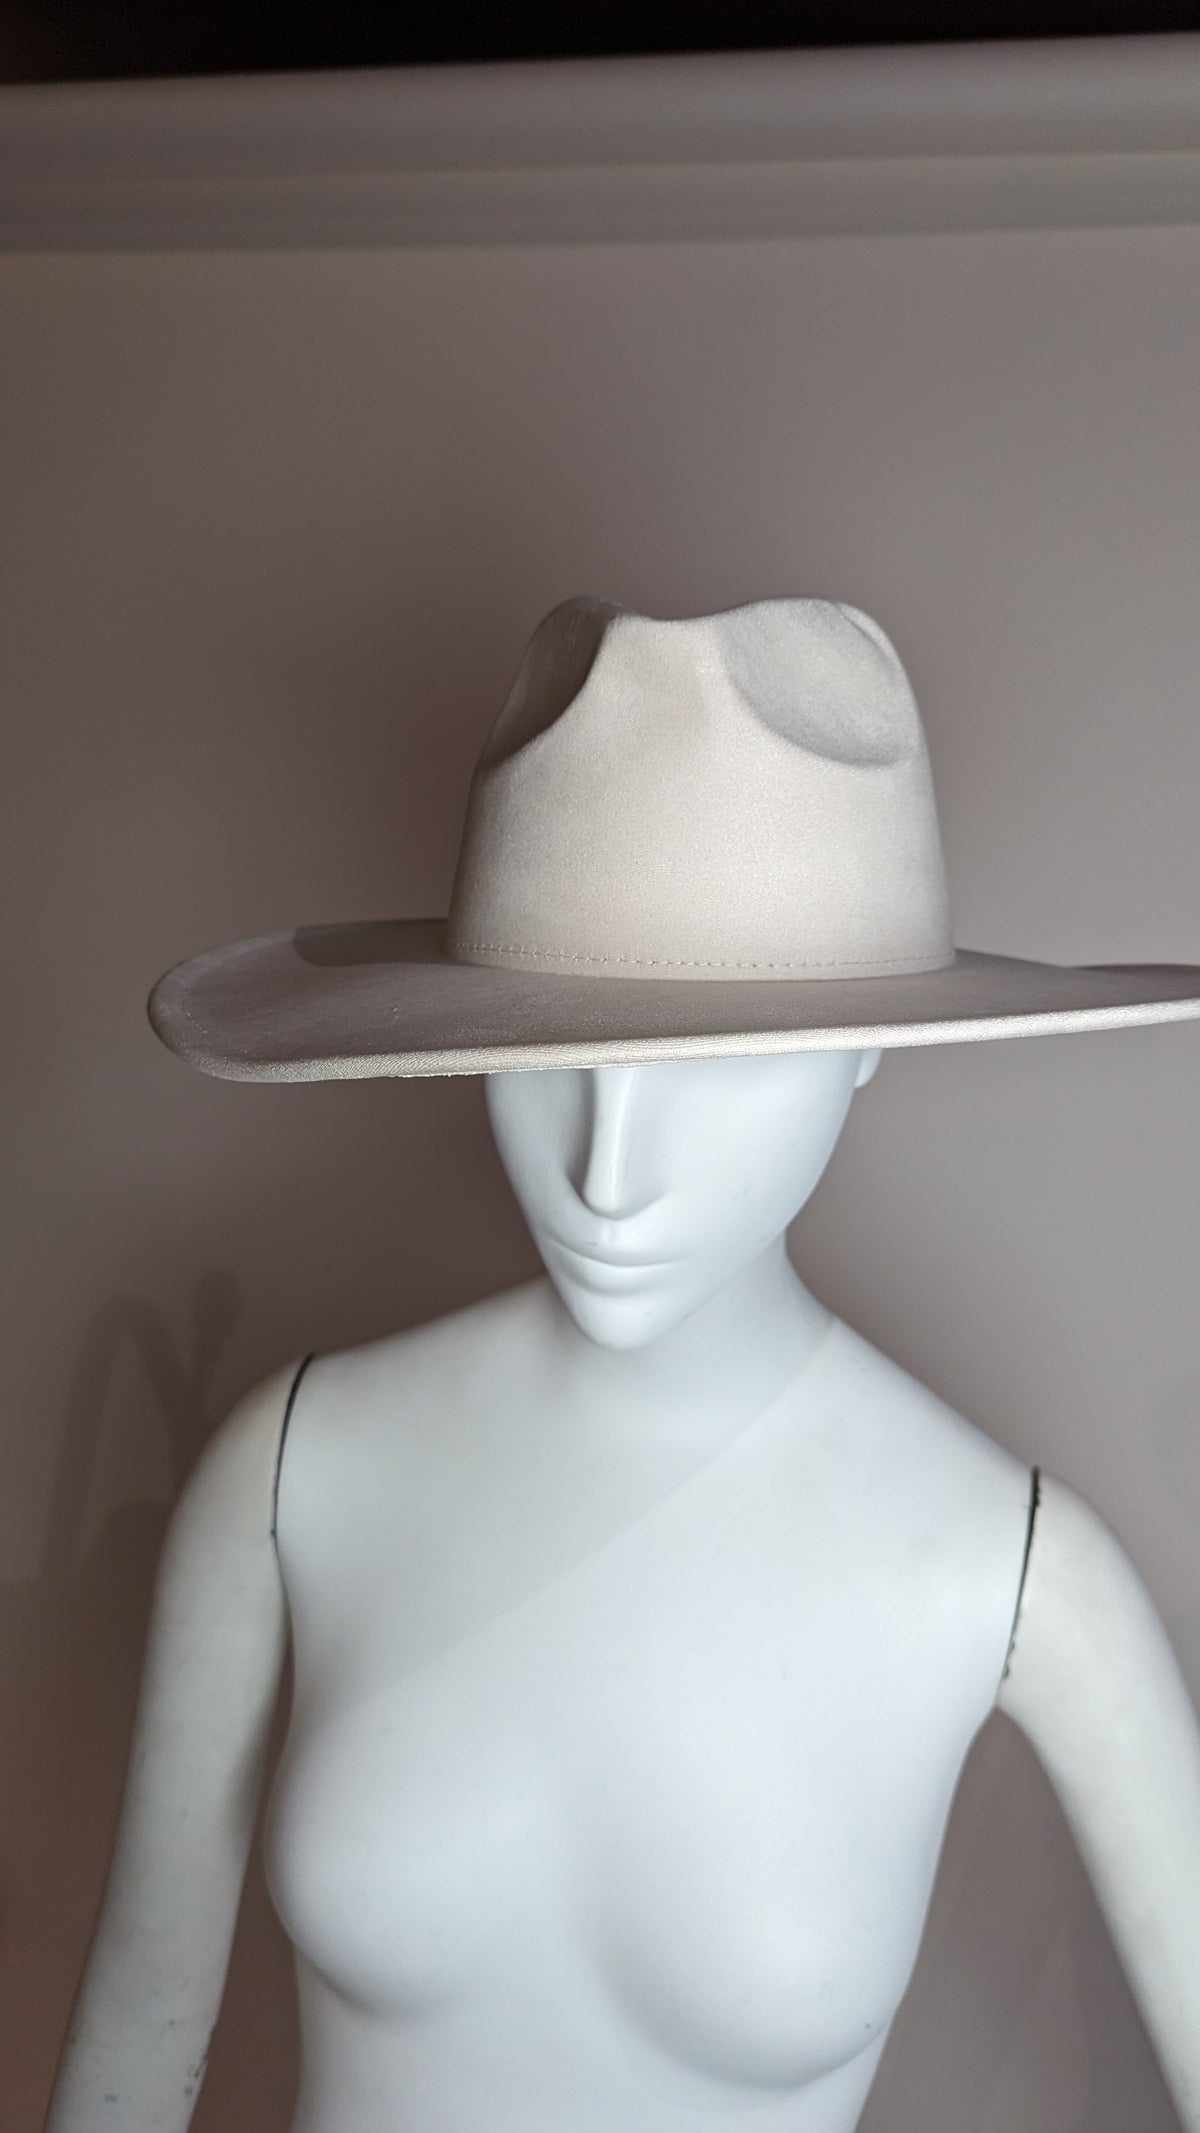 SAMPLE SALE - White Large Brim Hat - FINAL SALE